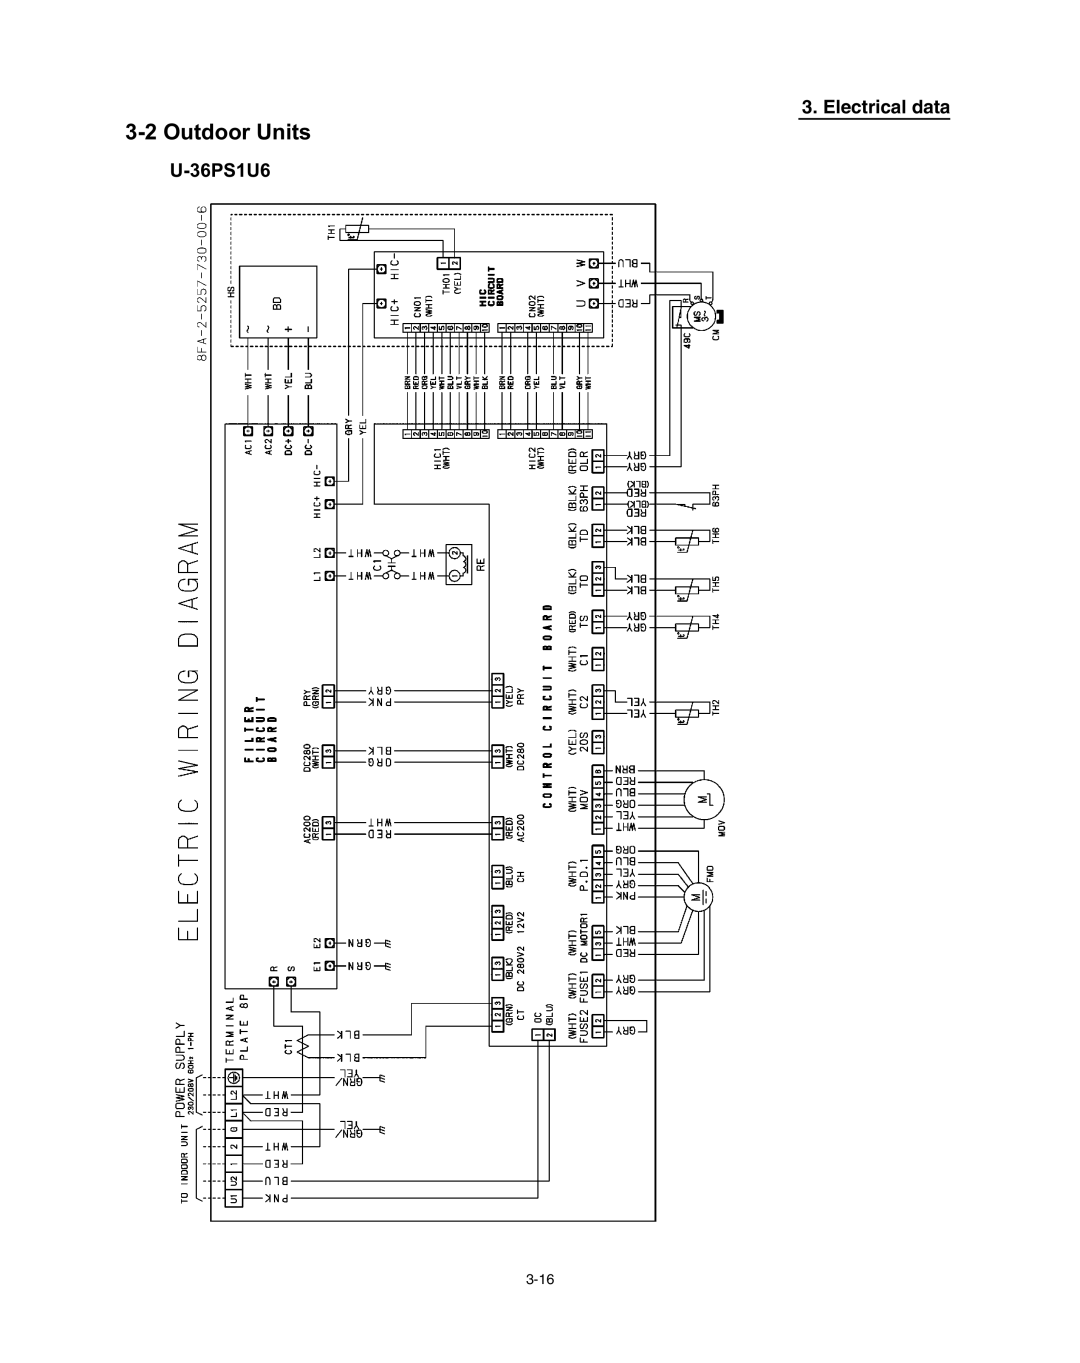 Panasonic R410A service manual 3-2Outdoor Units, Electrical data, U-36PS1U6 